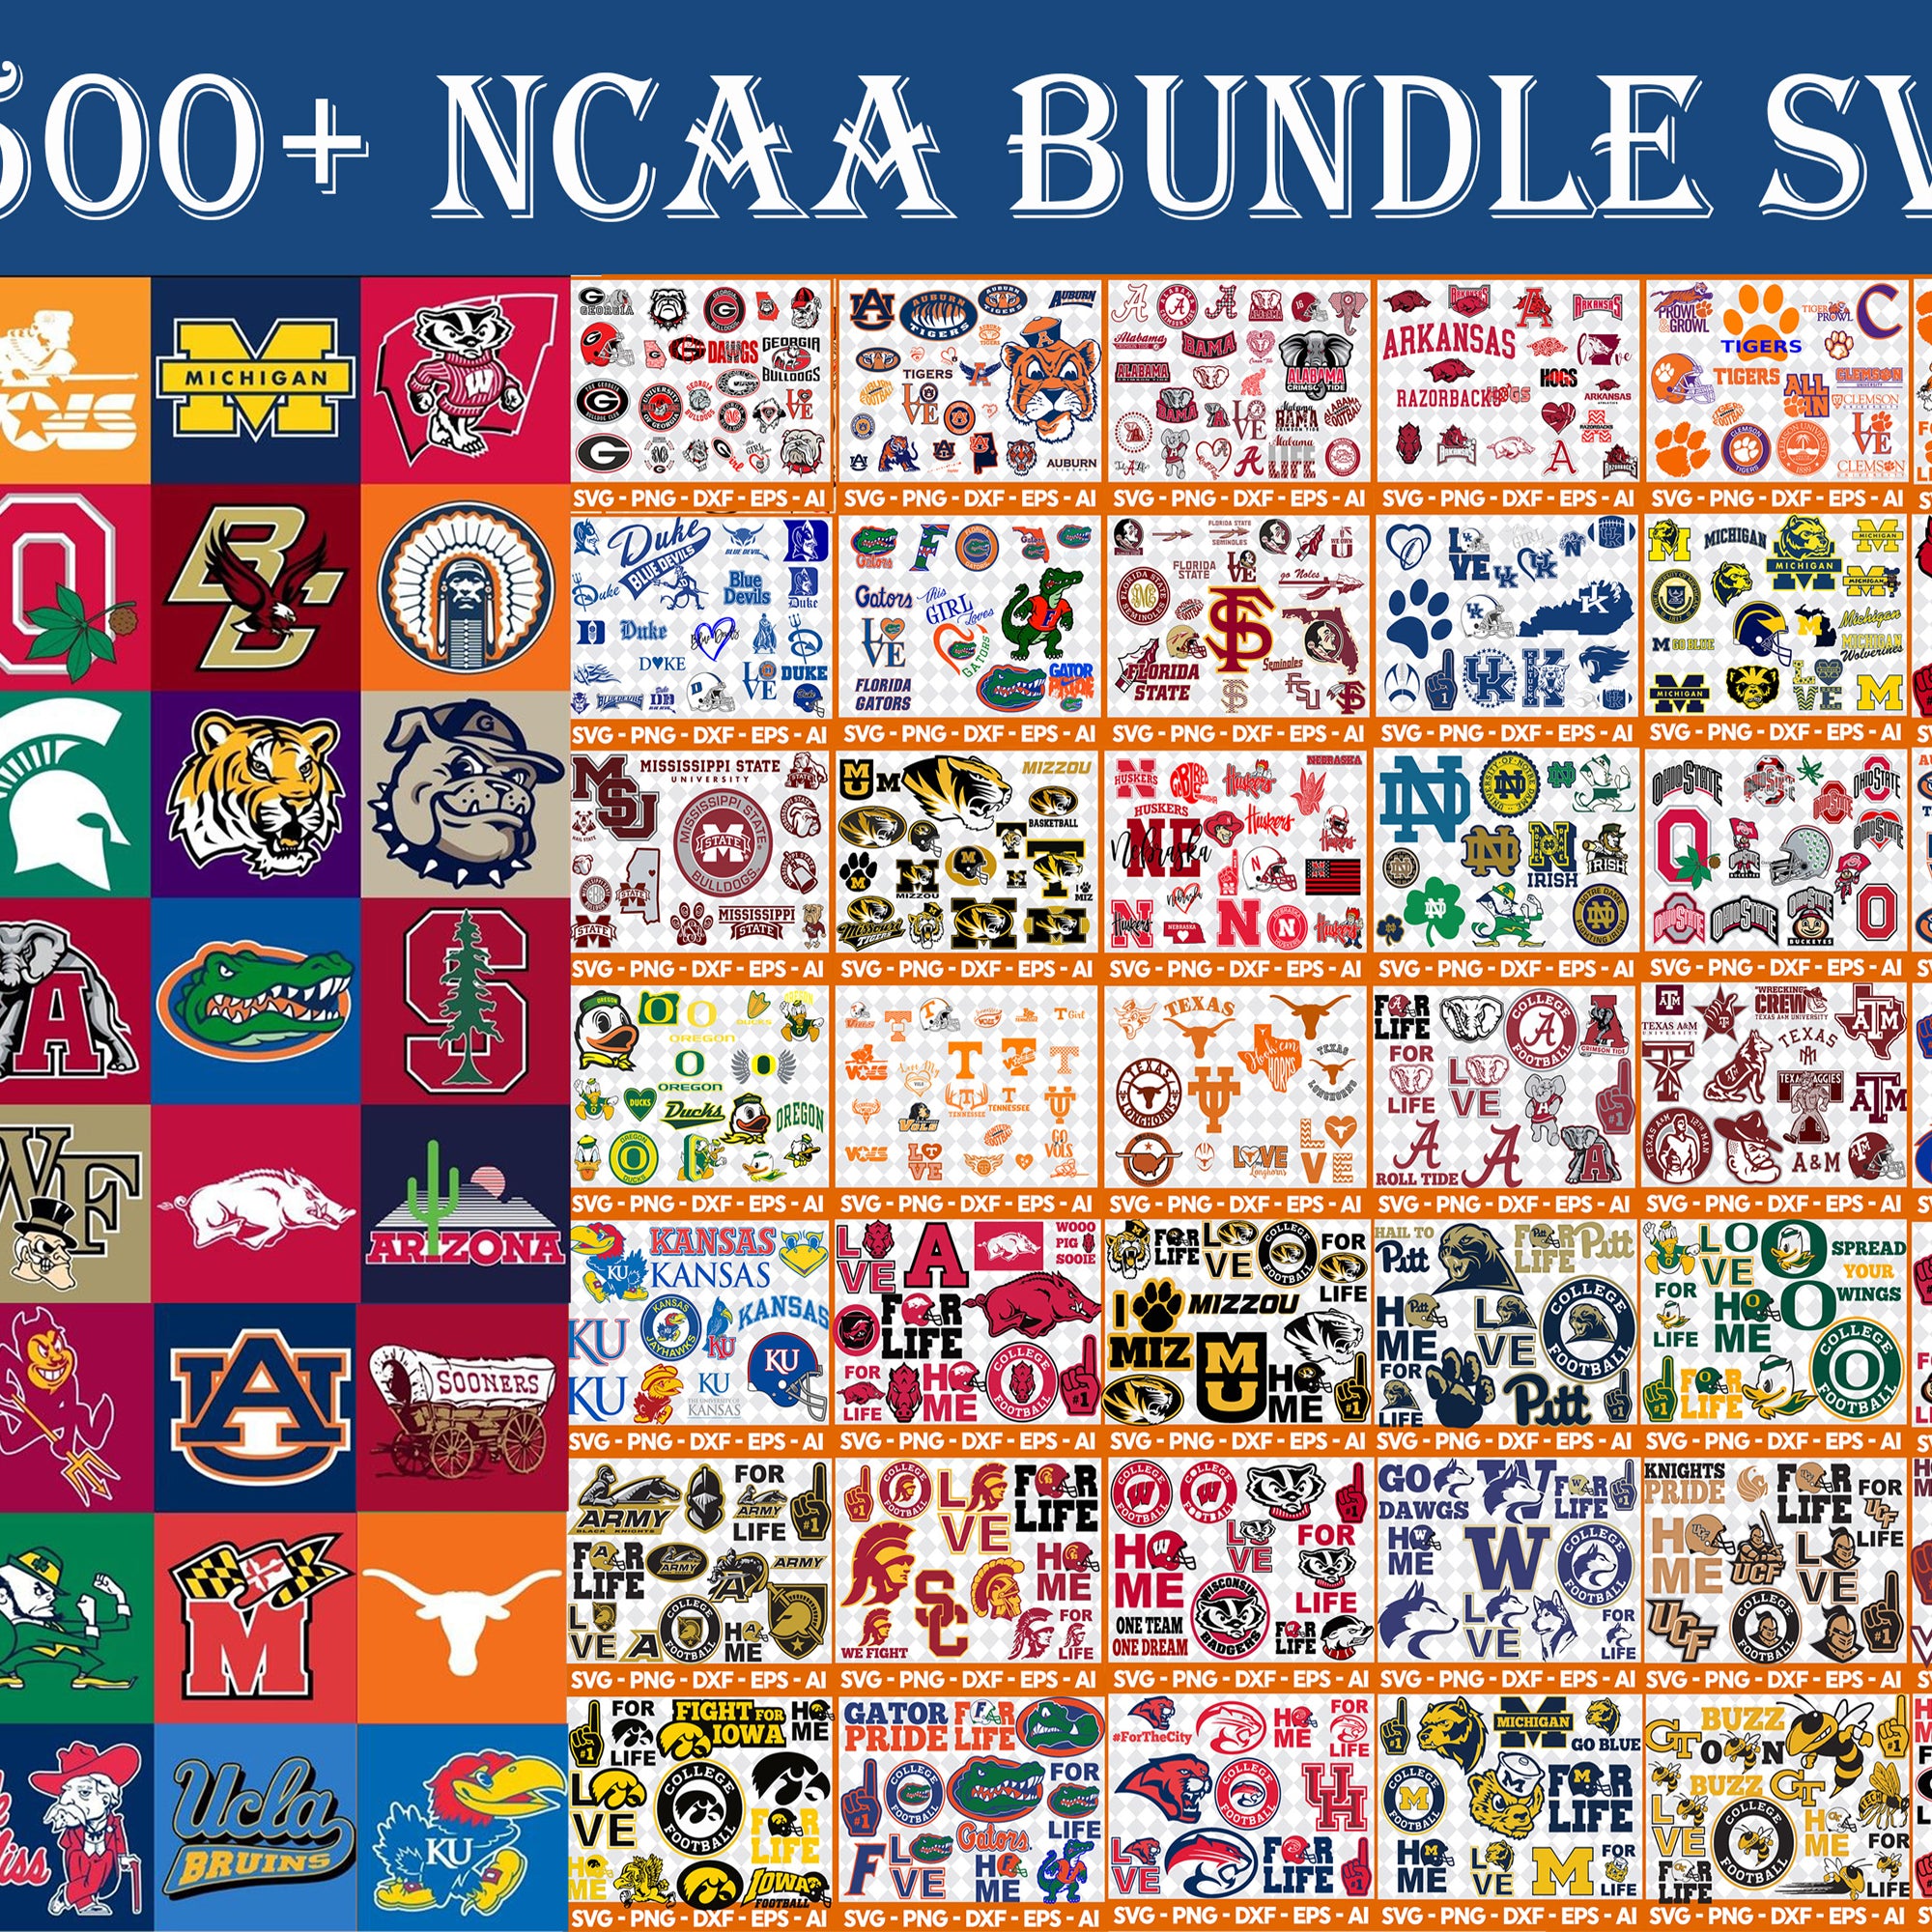 NCAA Bundle Svg, Sport Svg, Bundle Sport Svg, Mega Bundle Sport NCAA, All NCAA Teams 4500 Files